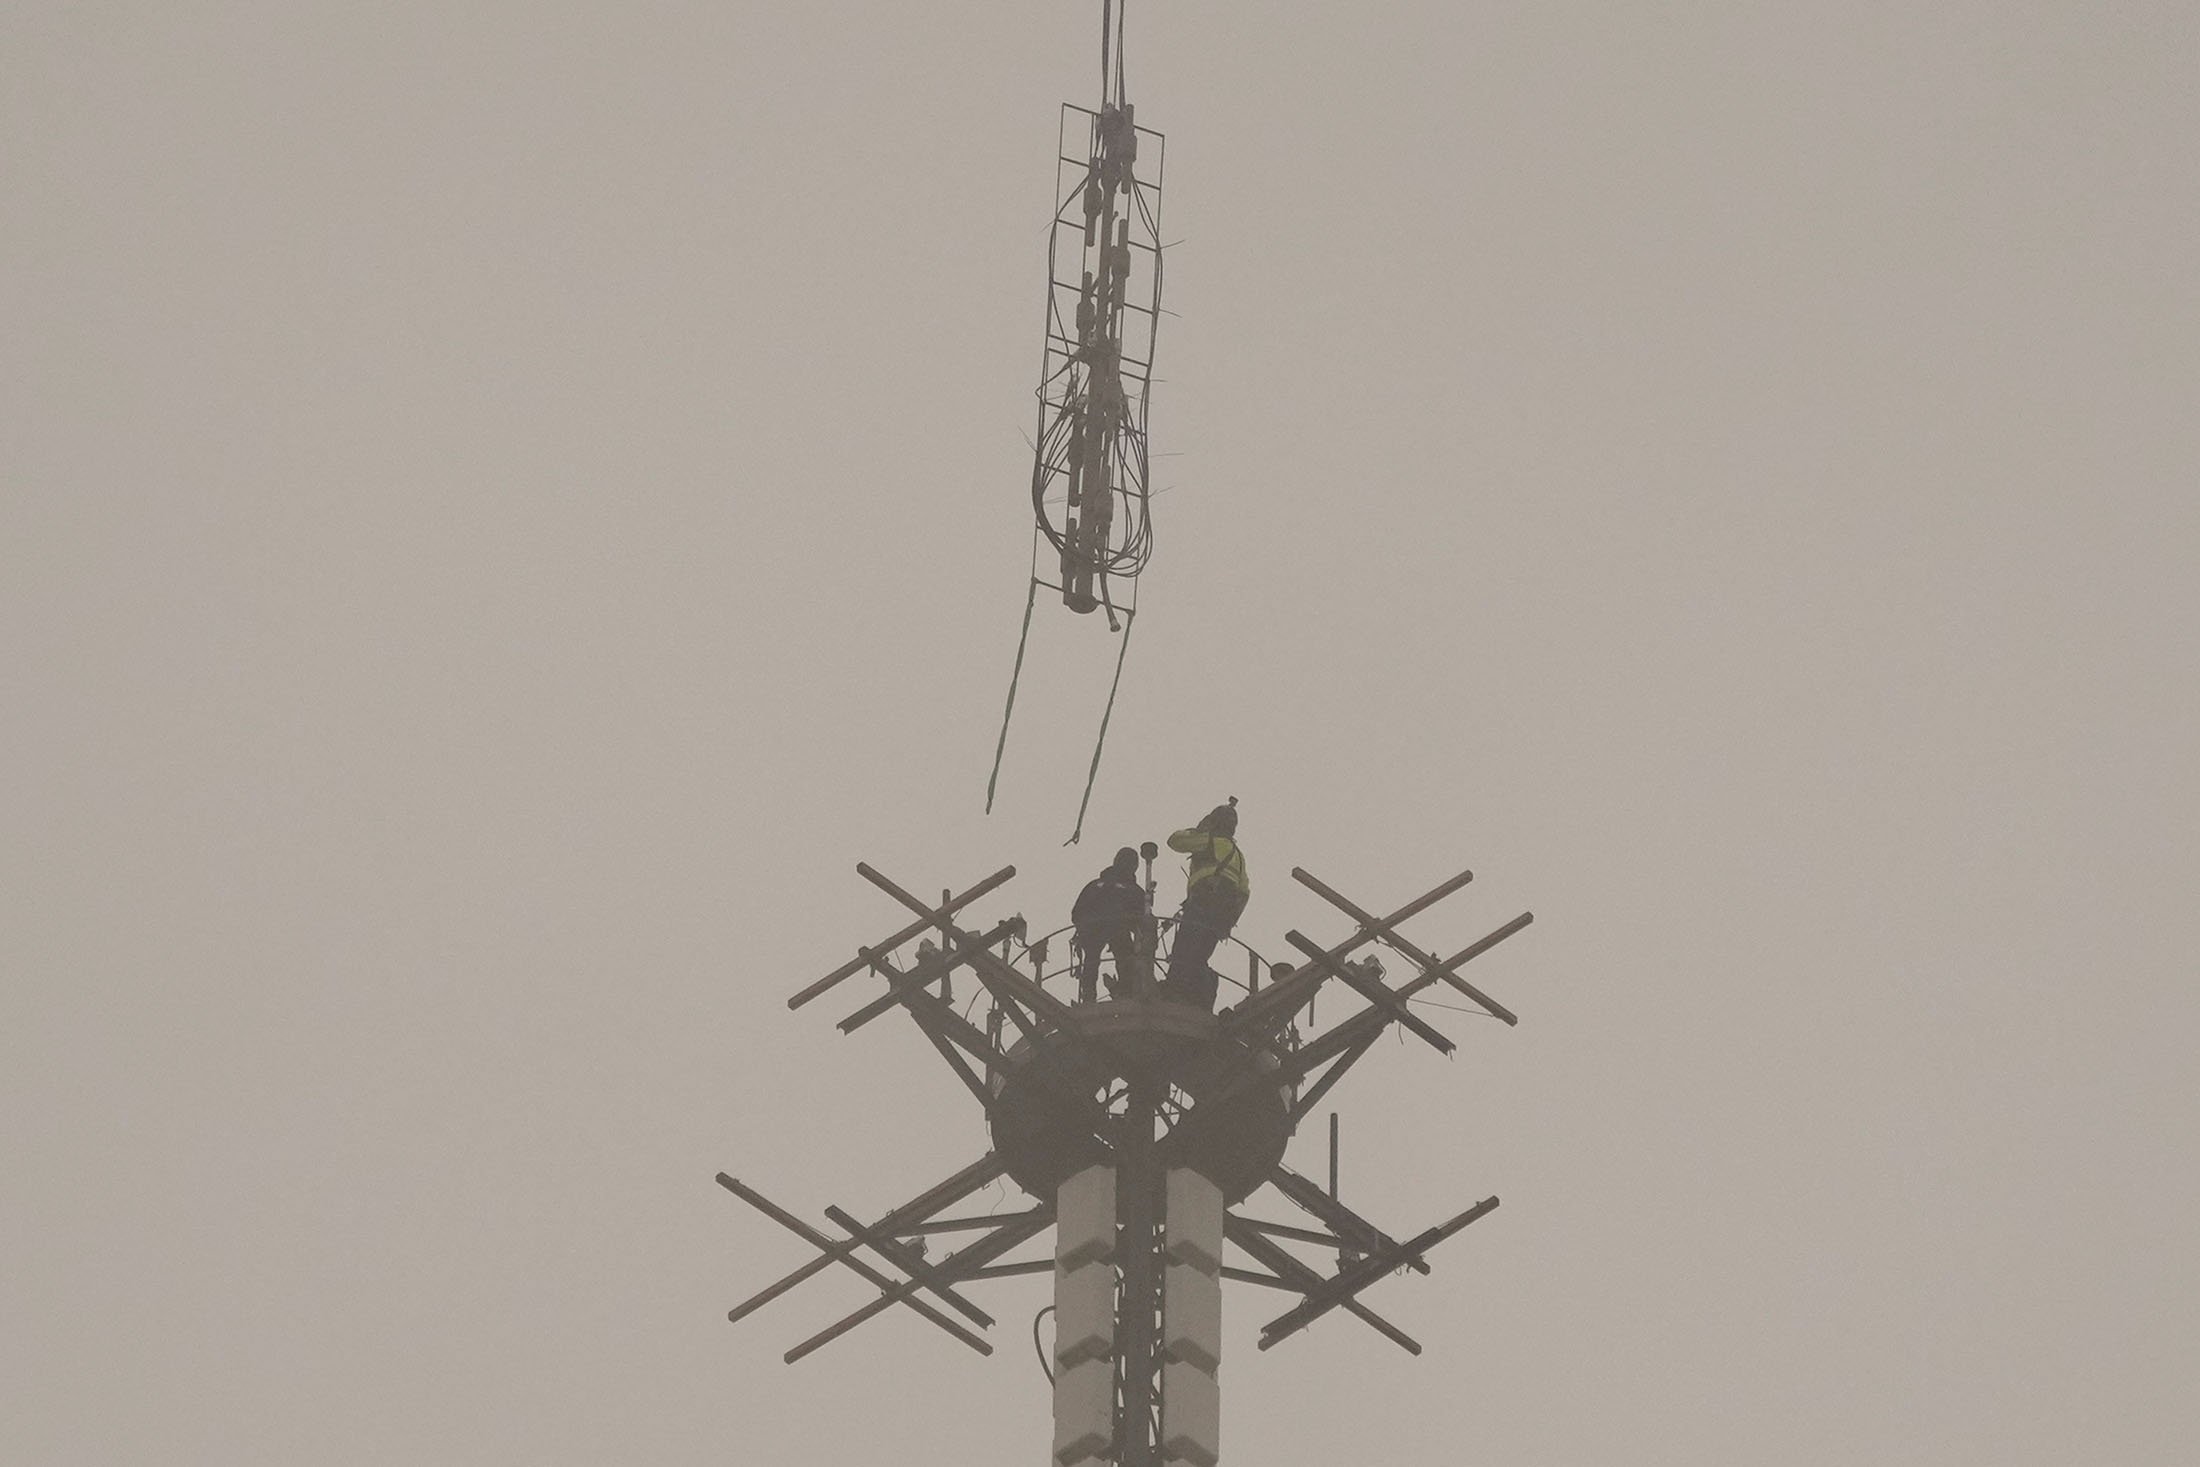 Helikopter Eurocopter Ecureuil 2 memasang antena transmisi telekomunikasi baru TDF (TeleDiffusion de France) di atas Menara Eiffel di Paris, Prancis, 15 Maret 2022. (AP Photo)